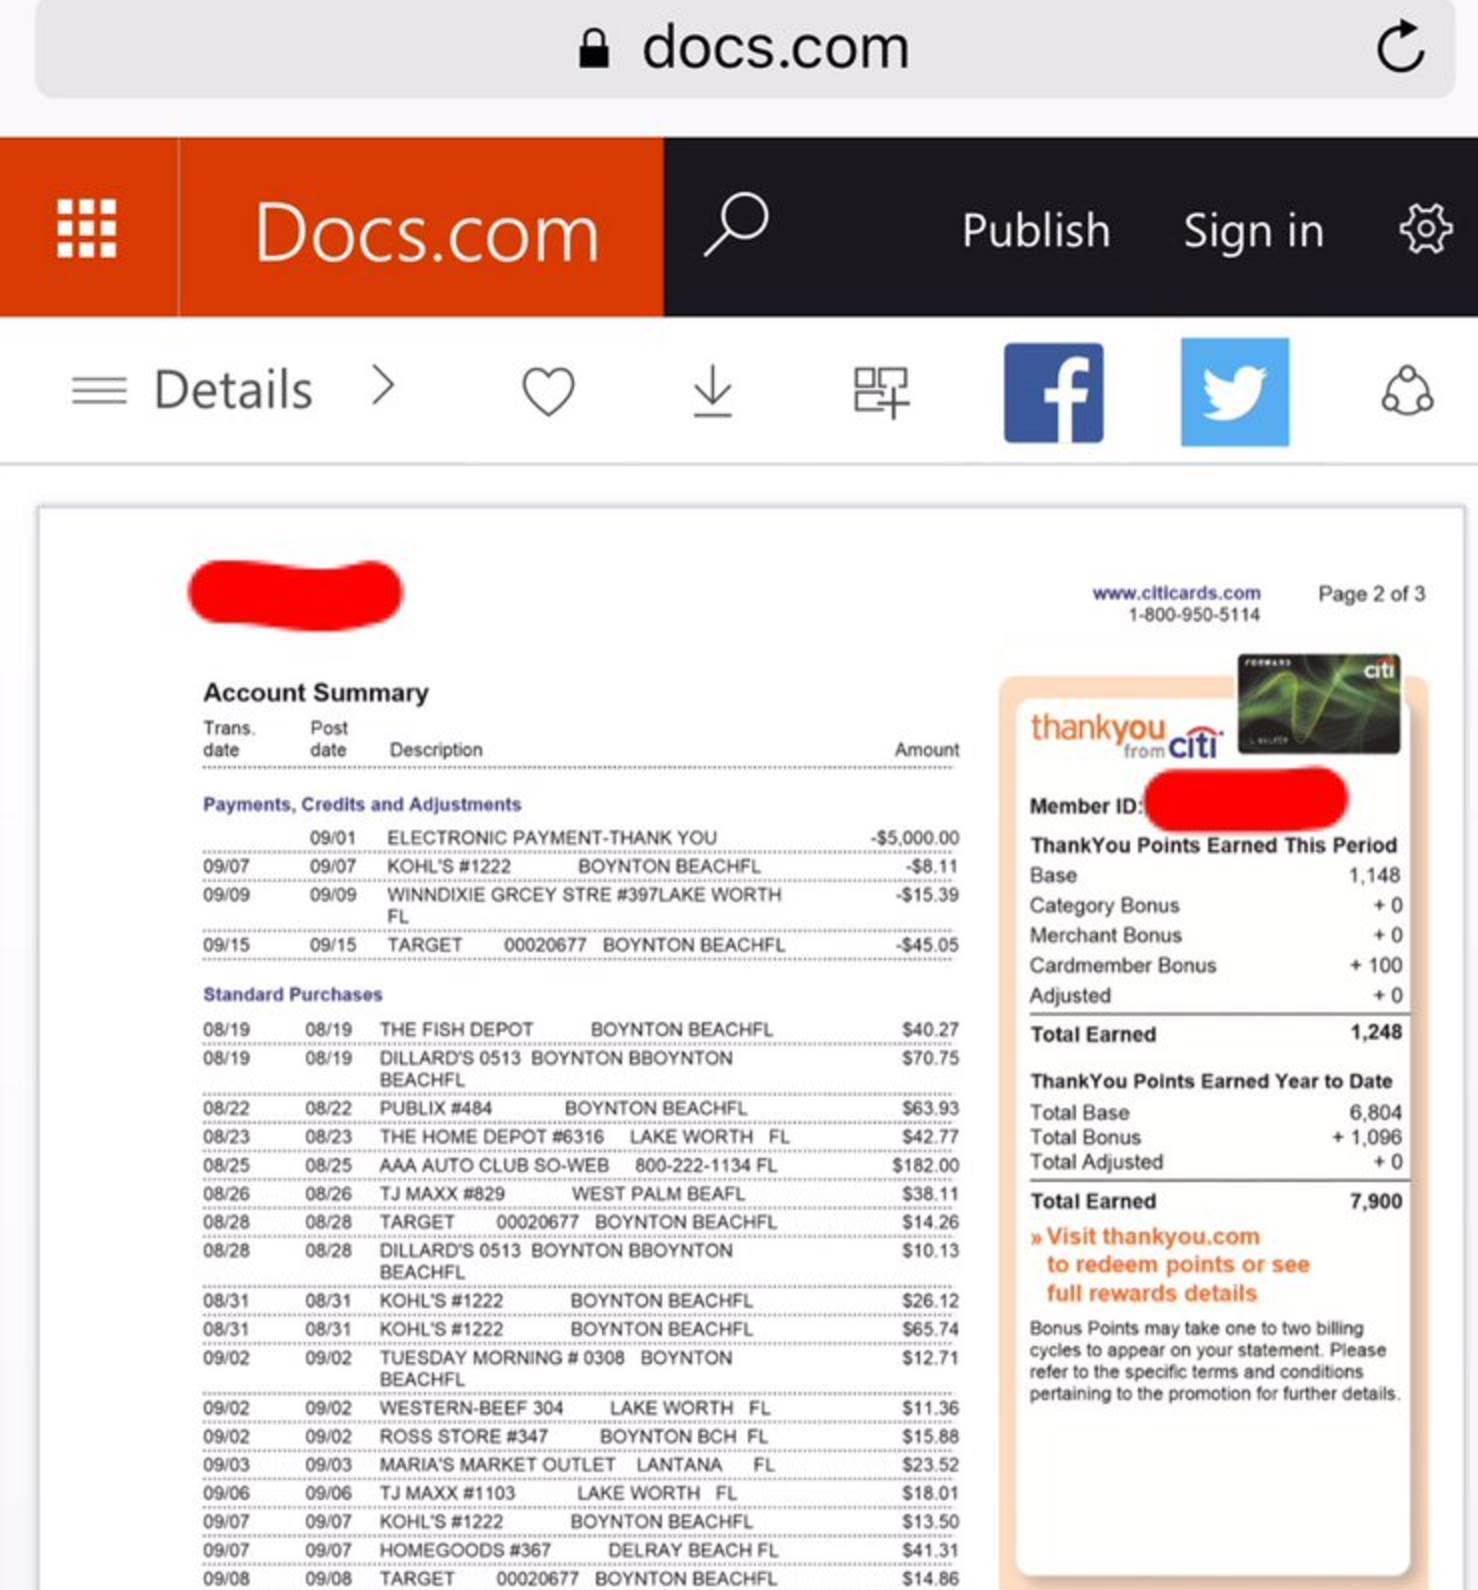 Microsoft’s Docs.com Leaks Sensitive Files To Everyone